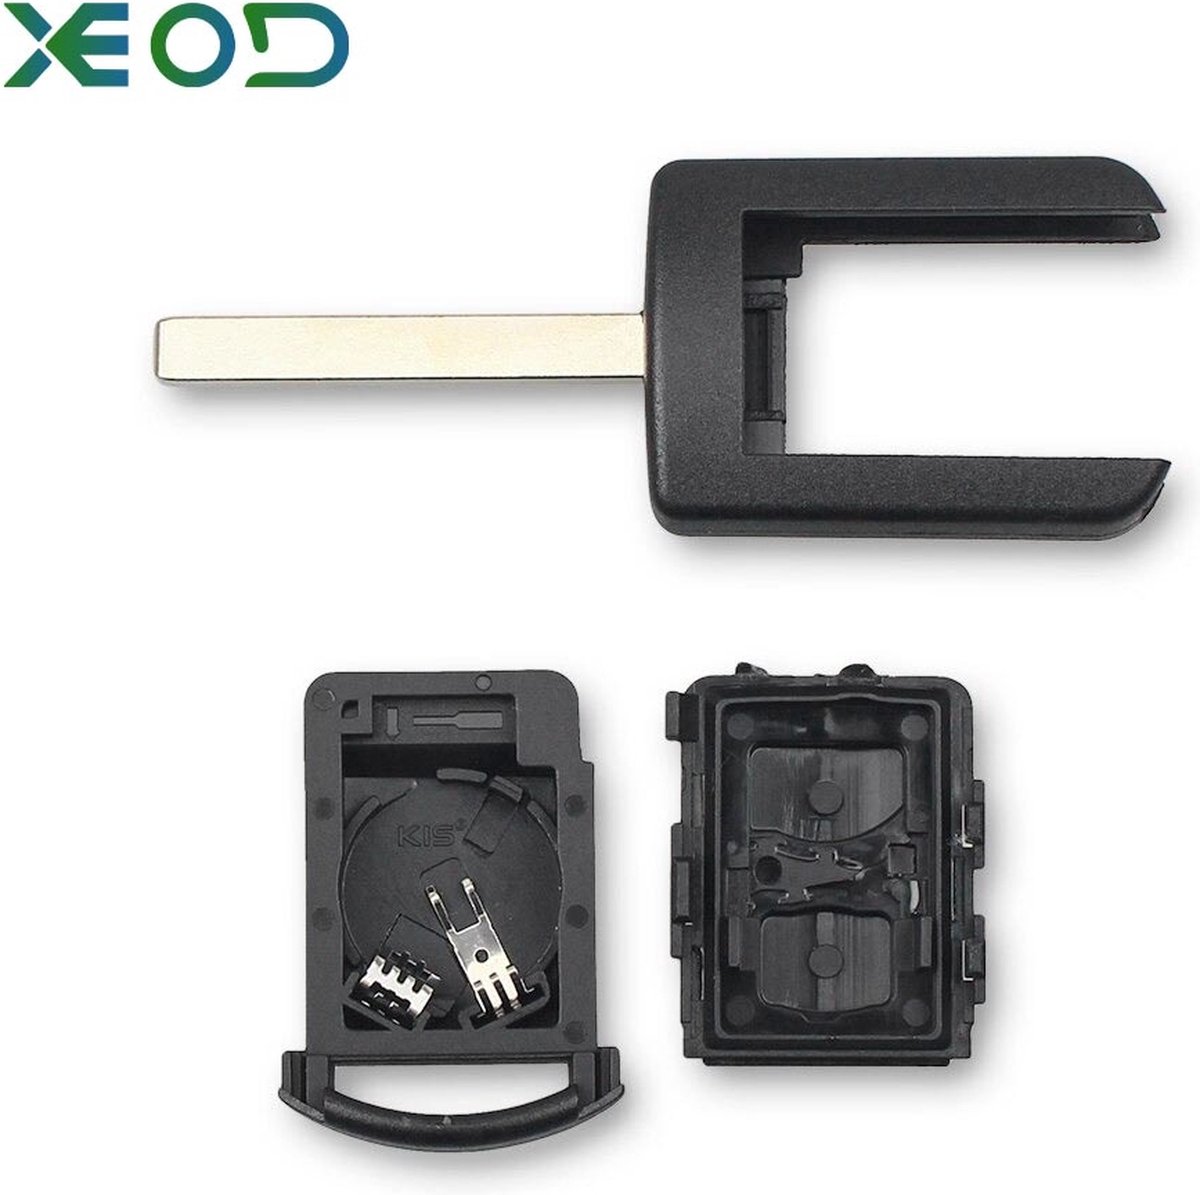 XEOD Autosleutelbehuizing - sleutelbehuizing auto - sleutel - Autosleutel / Geschikt voor: Opel Astra, Corsa, Omega, Vectra & Zafira 2 knops